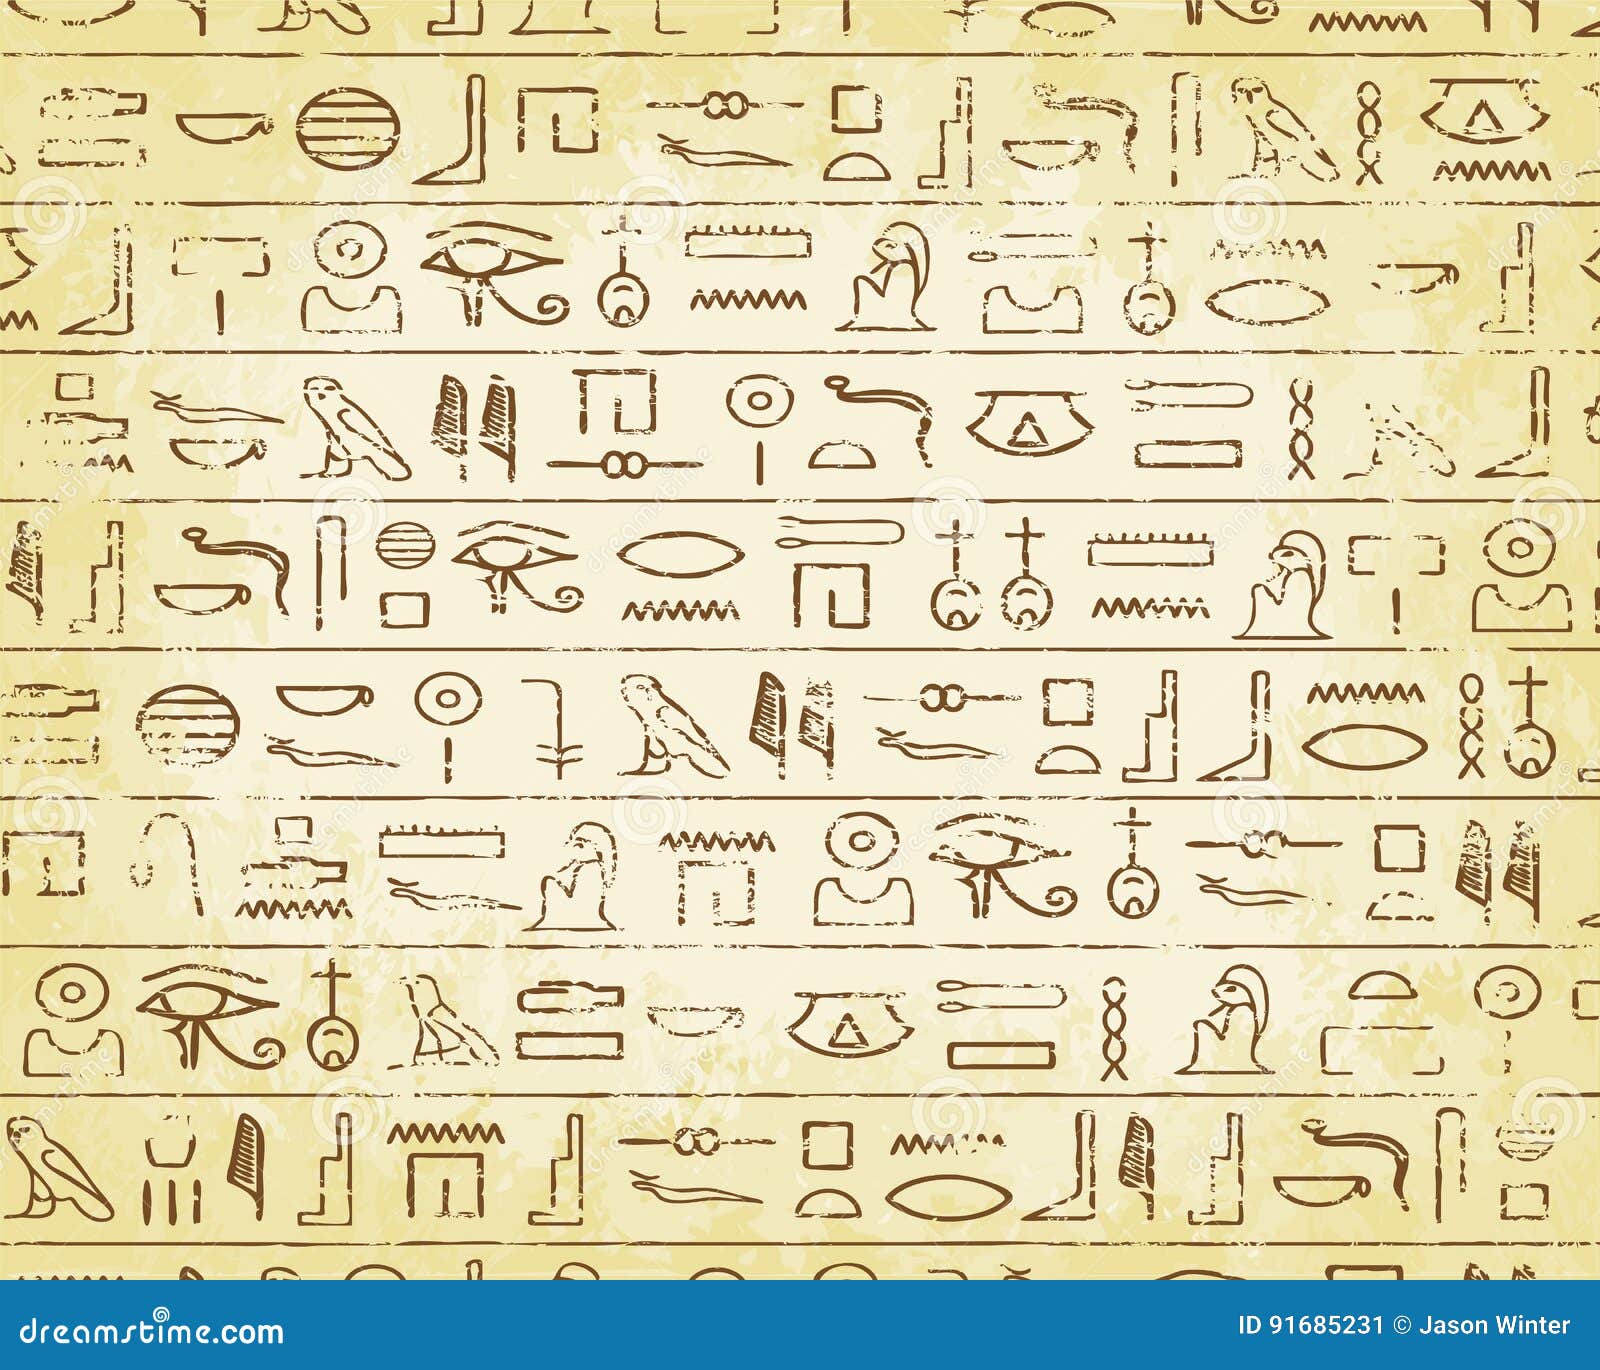 hieroglyphics background